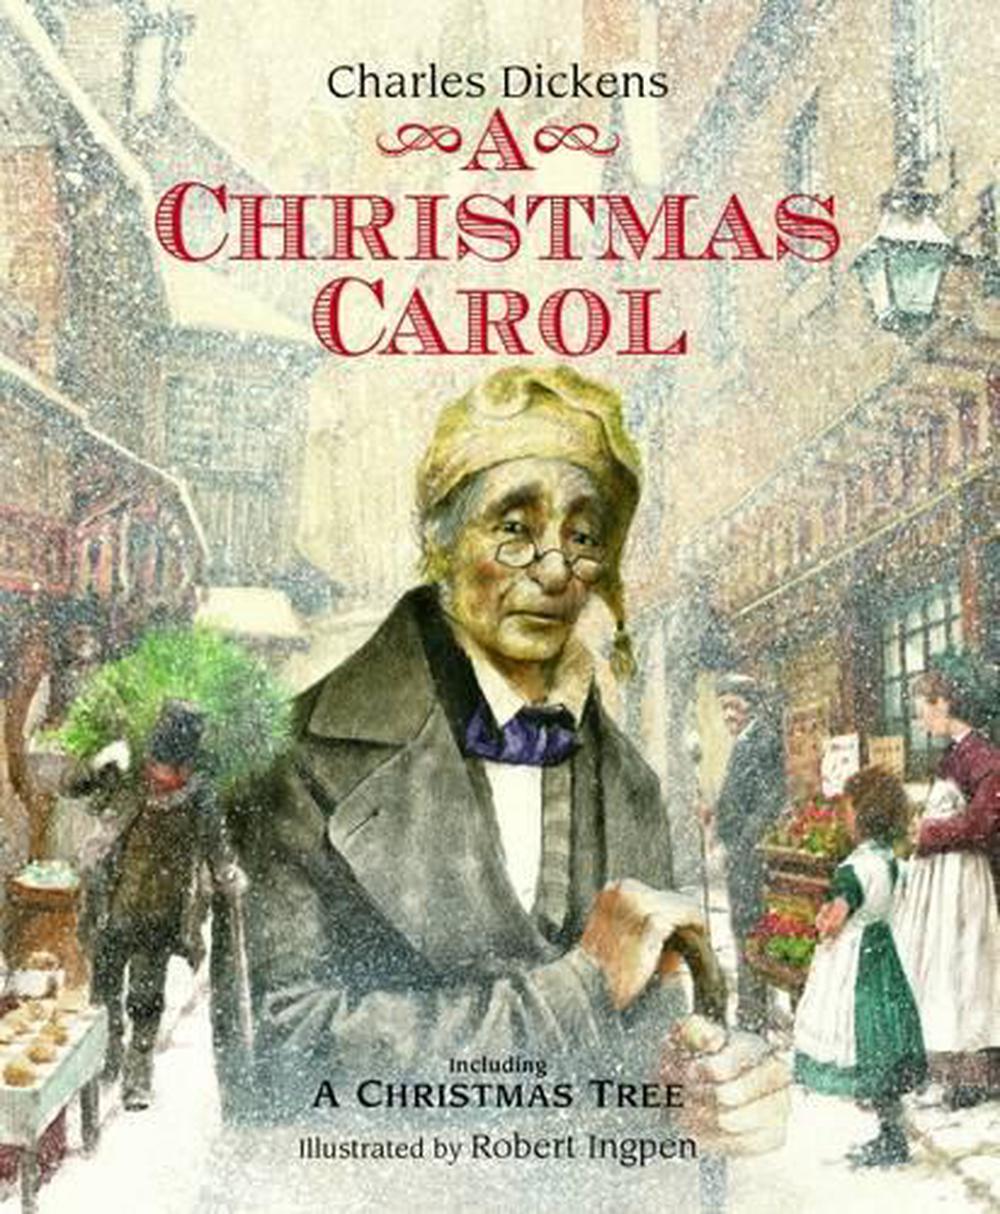 a christmas carol charles dickens pdf free download